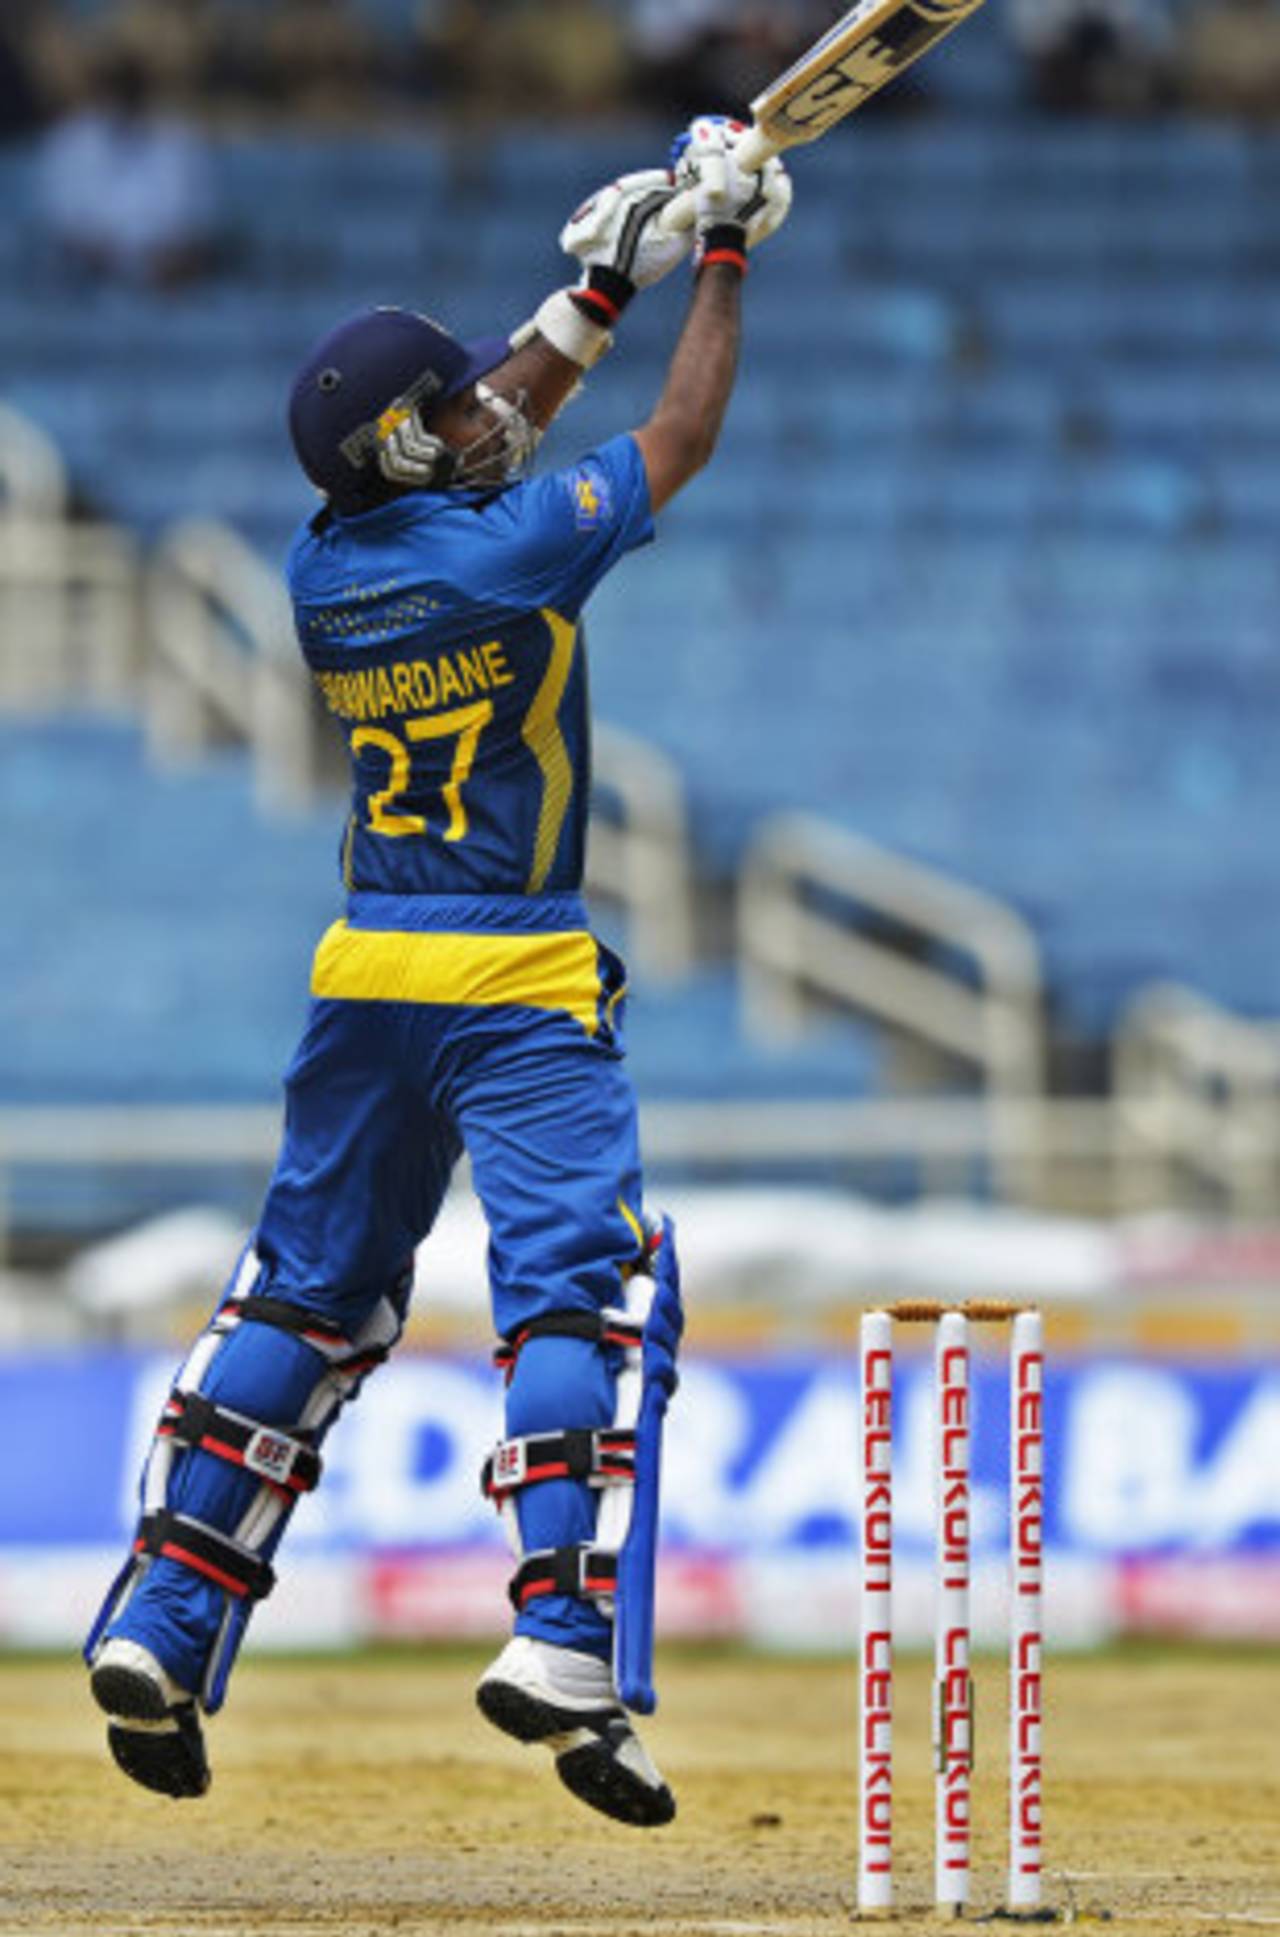 Mahela Jayawardene plays one over third man, India v Sri Lanka, West Indies tri-series, Kingston, July 2, 2013